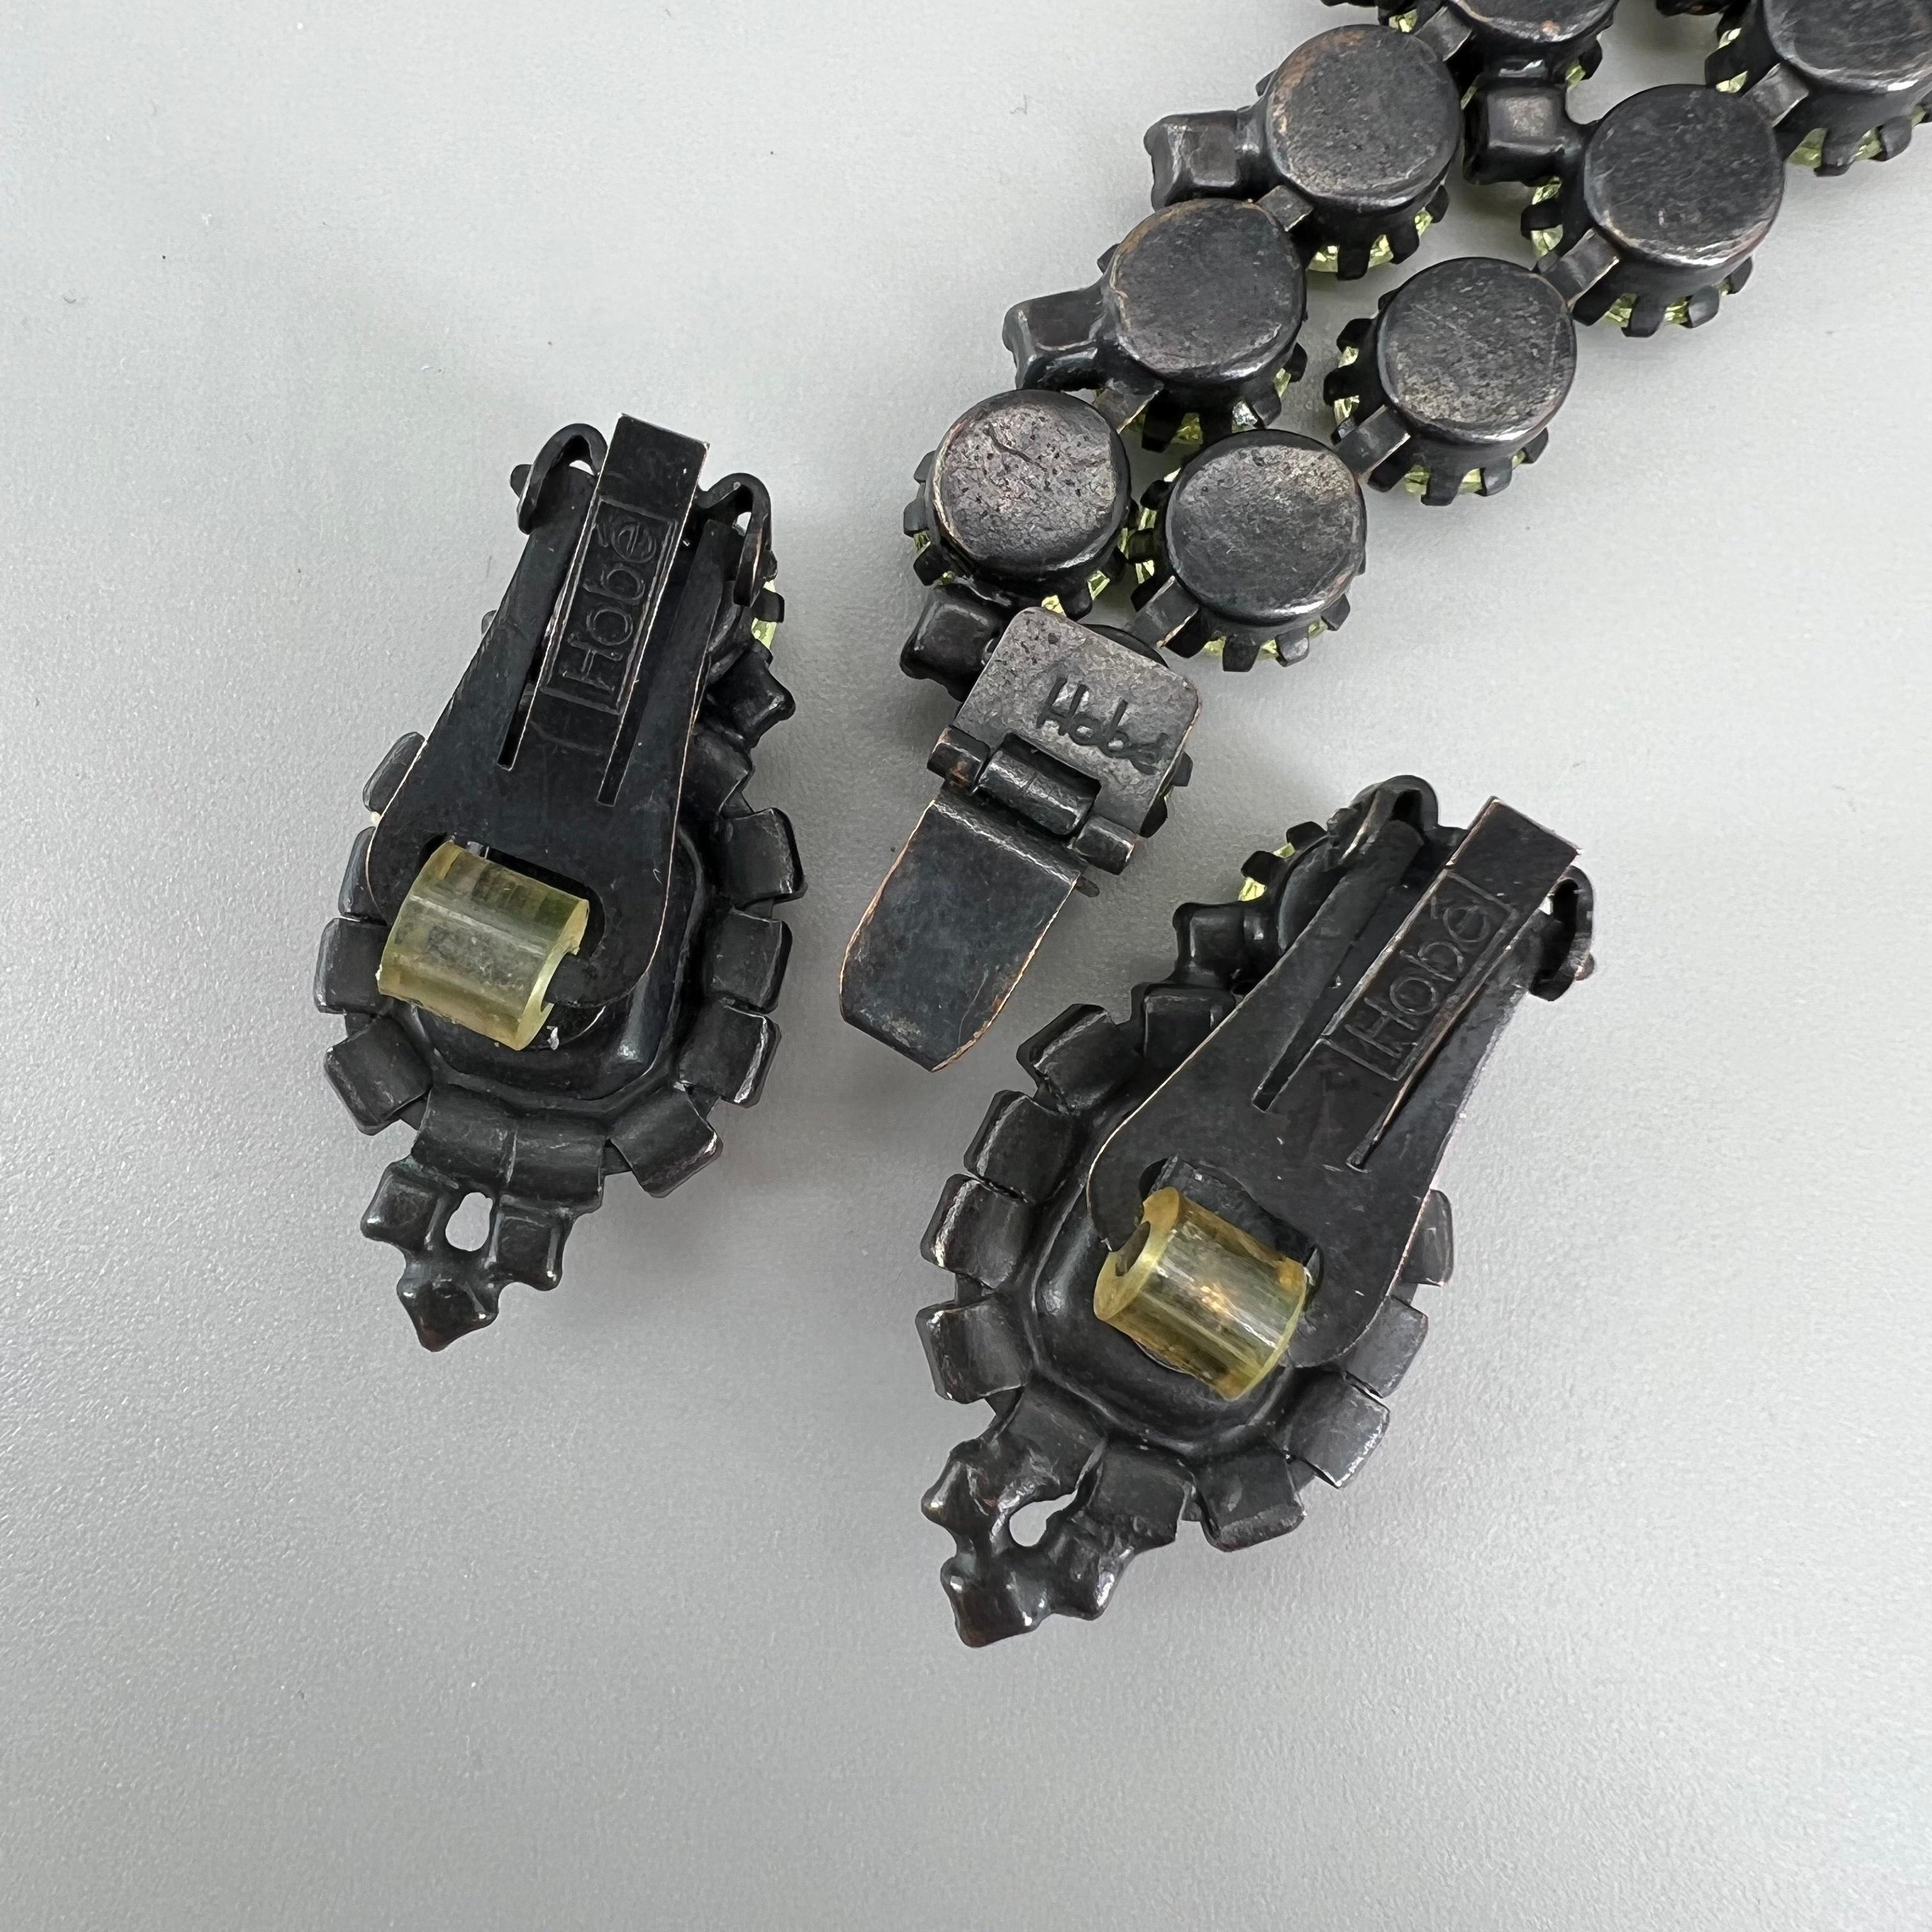 Japanned Uranium HOBE Festoon Bib Glass Necklace Earrings Hollywood 1930s Jewelry For Sale